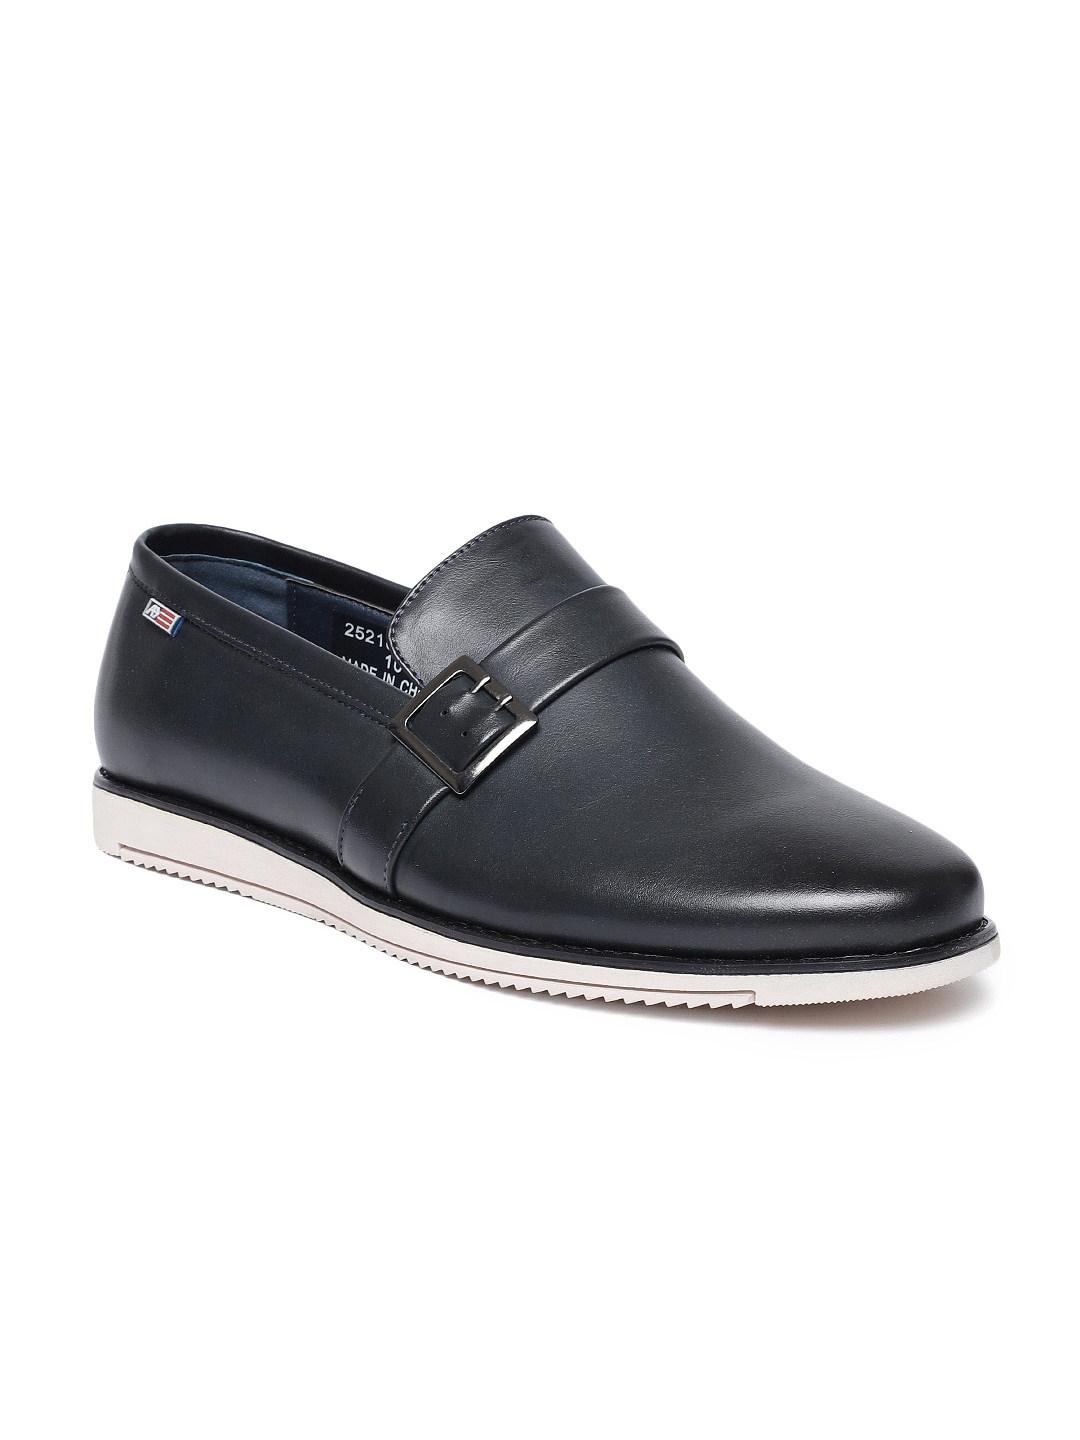 Buy Arrow Men Navy Blue Semi Formal Leather Slip On Shoes - Formal ...